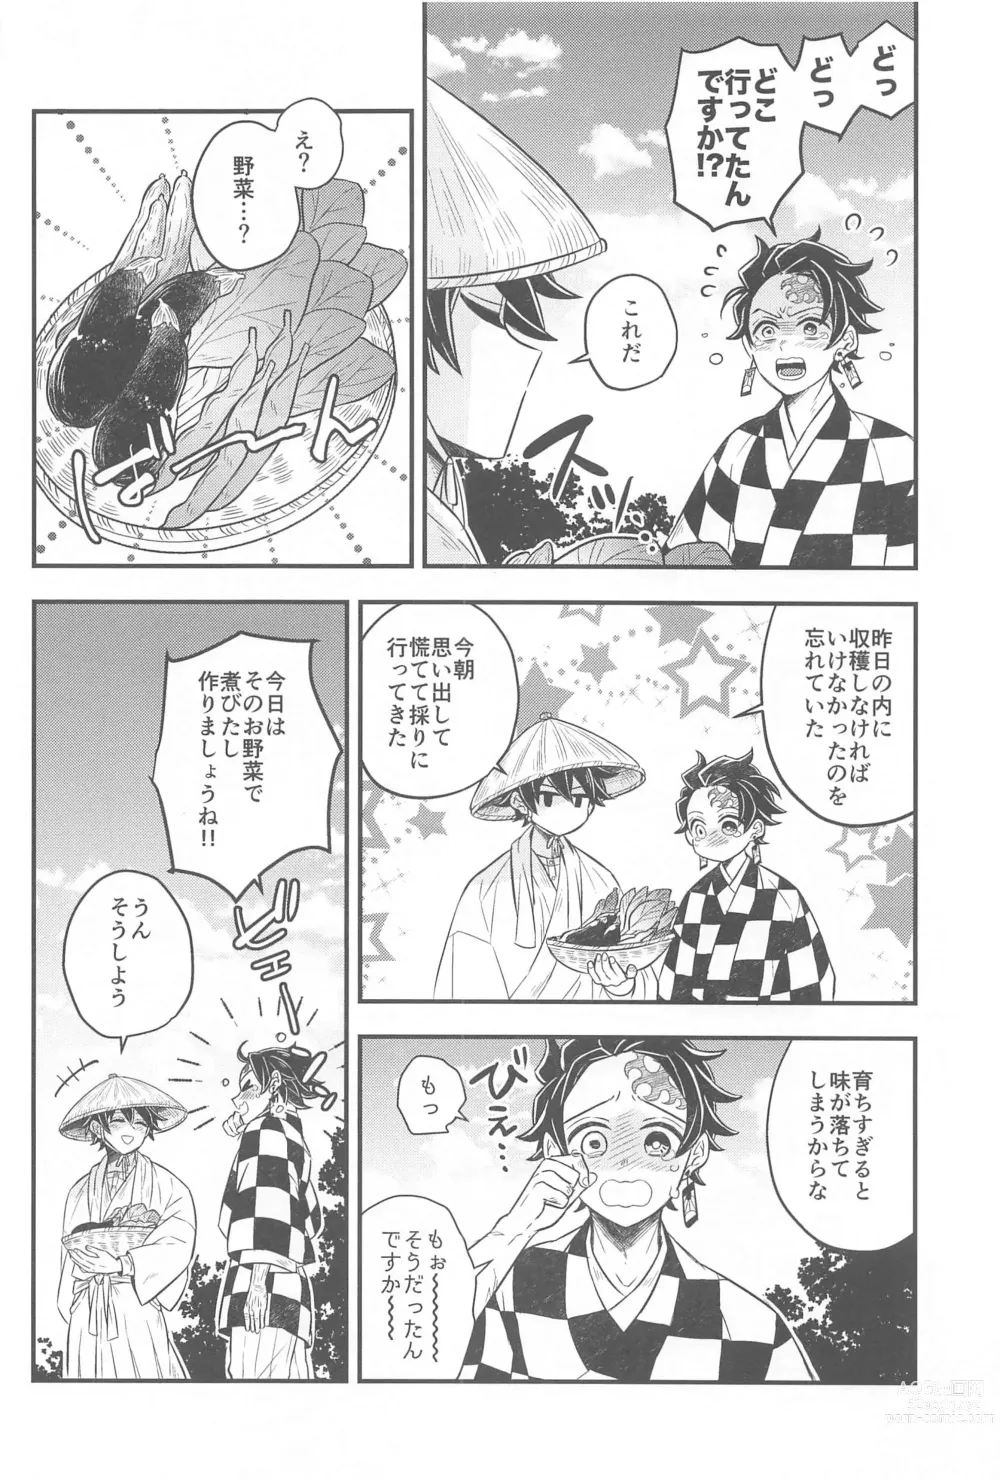 Page 9 of doujinshi Shoya no Yokuasa - the morning after the first night